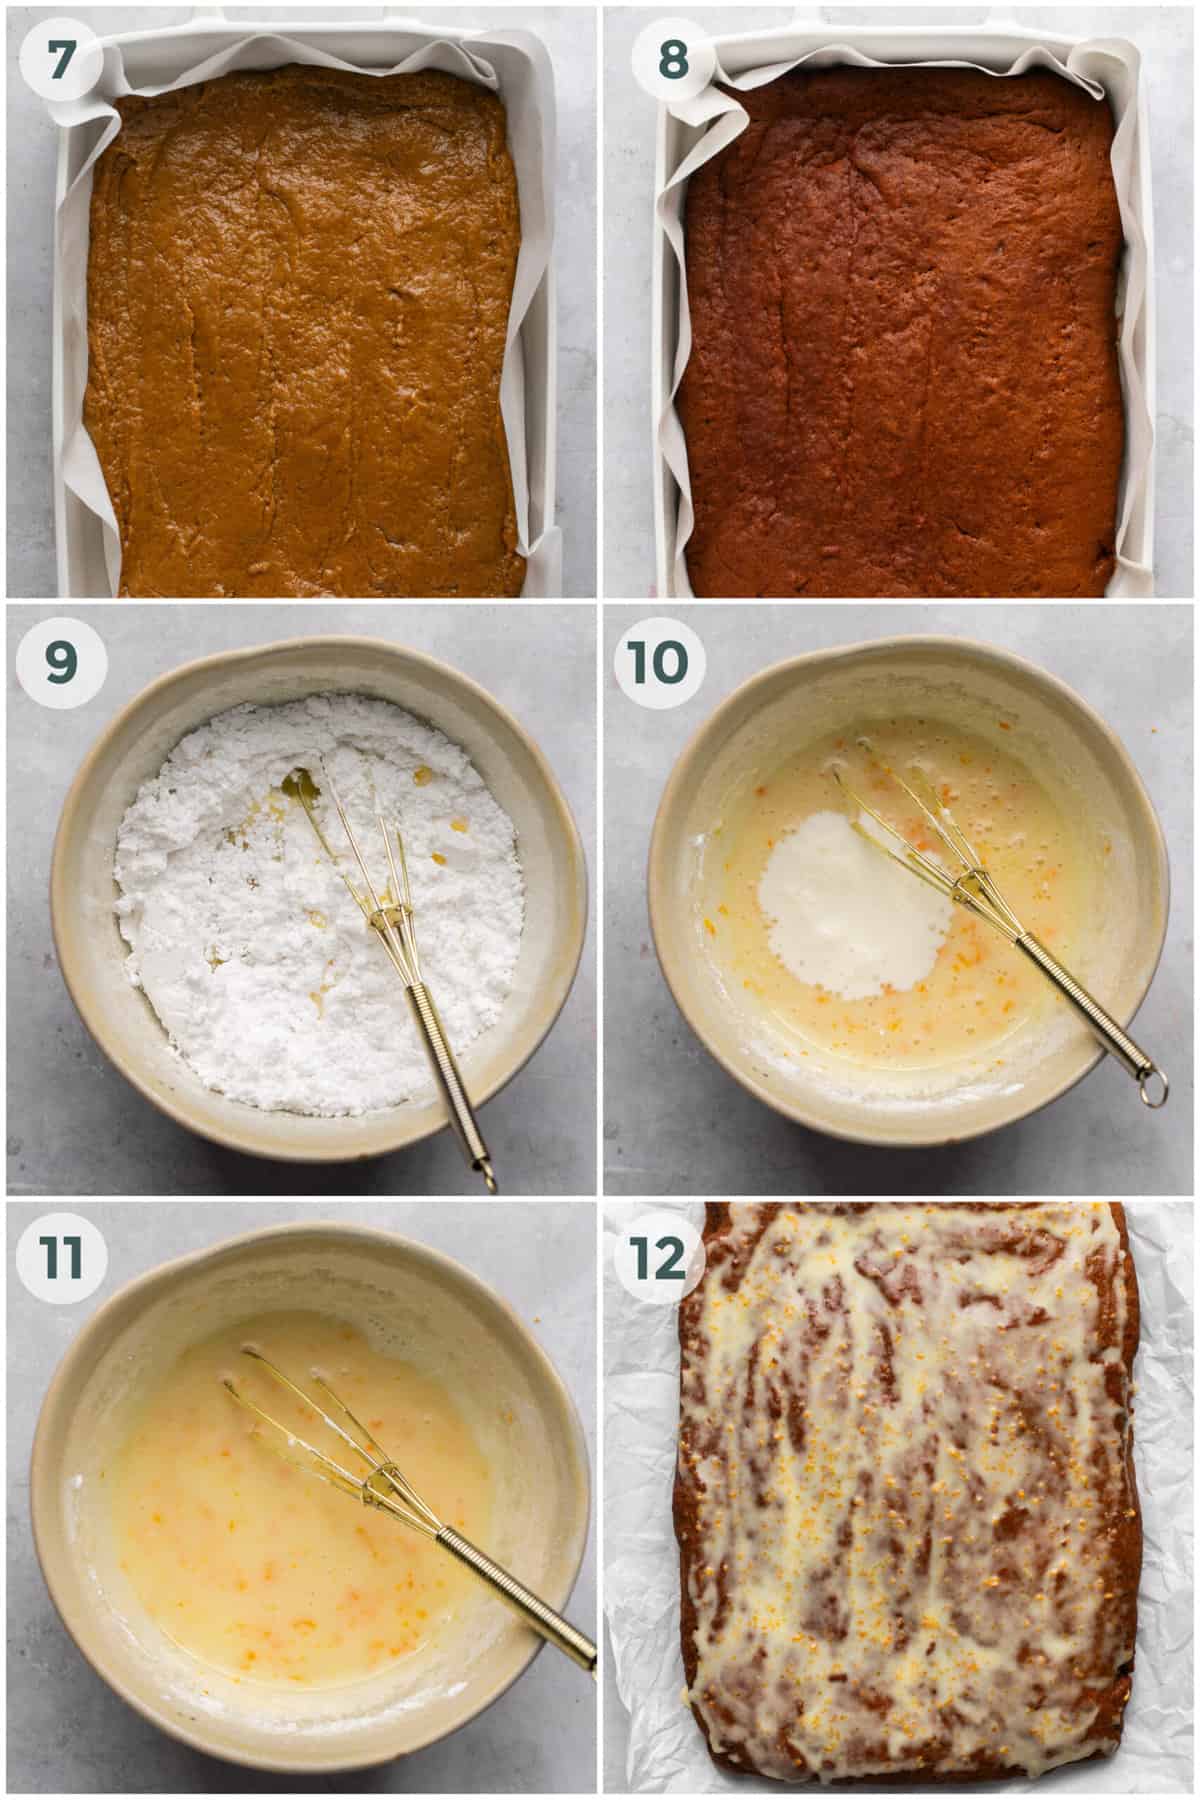 steps 7-12 of preparing gingerbread cake recipe